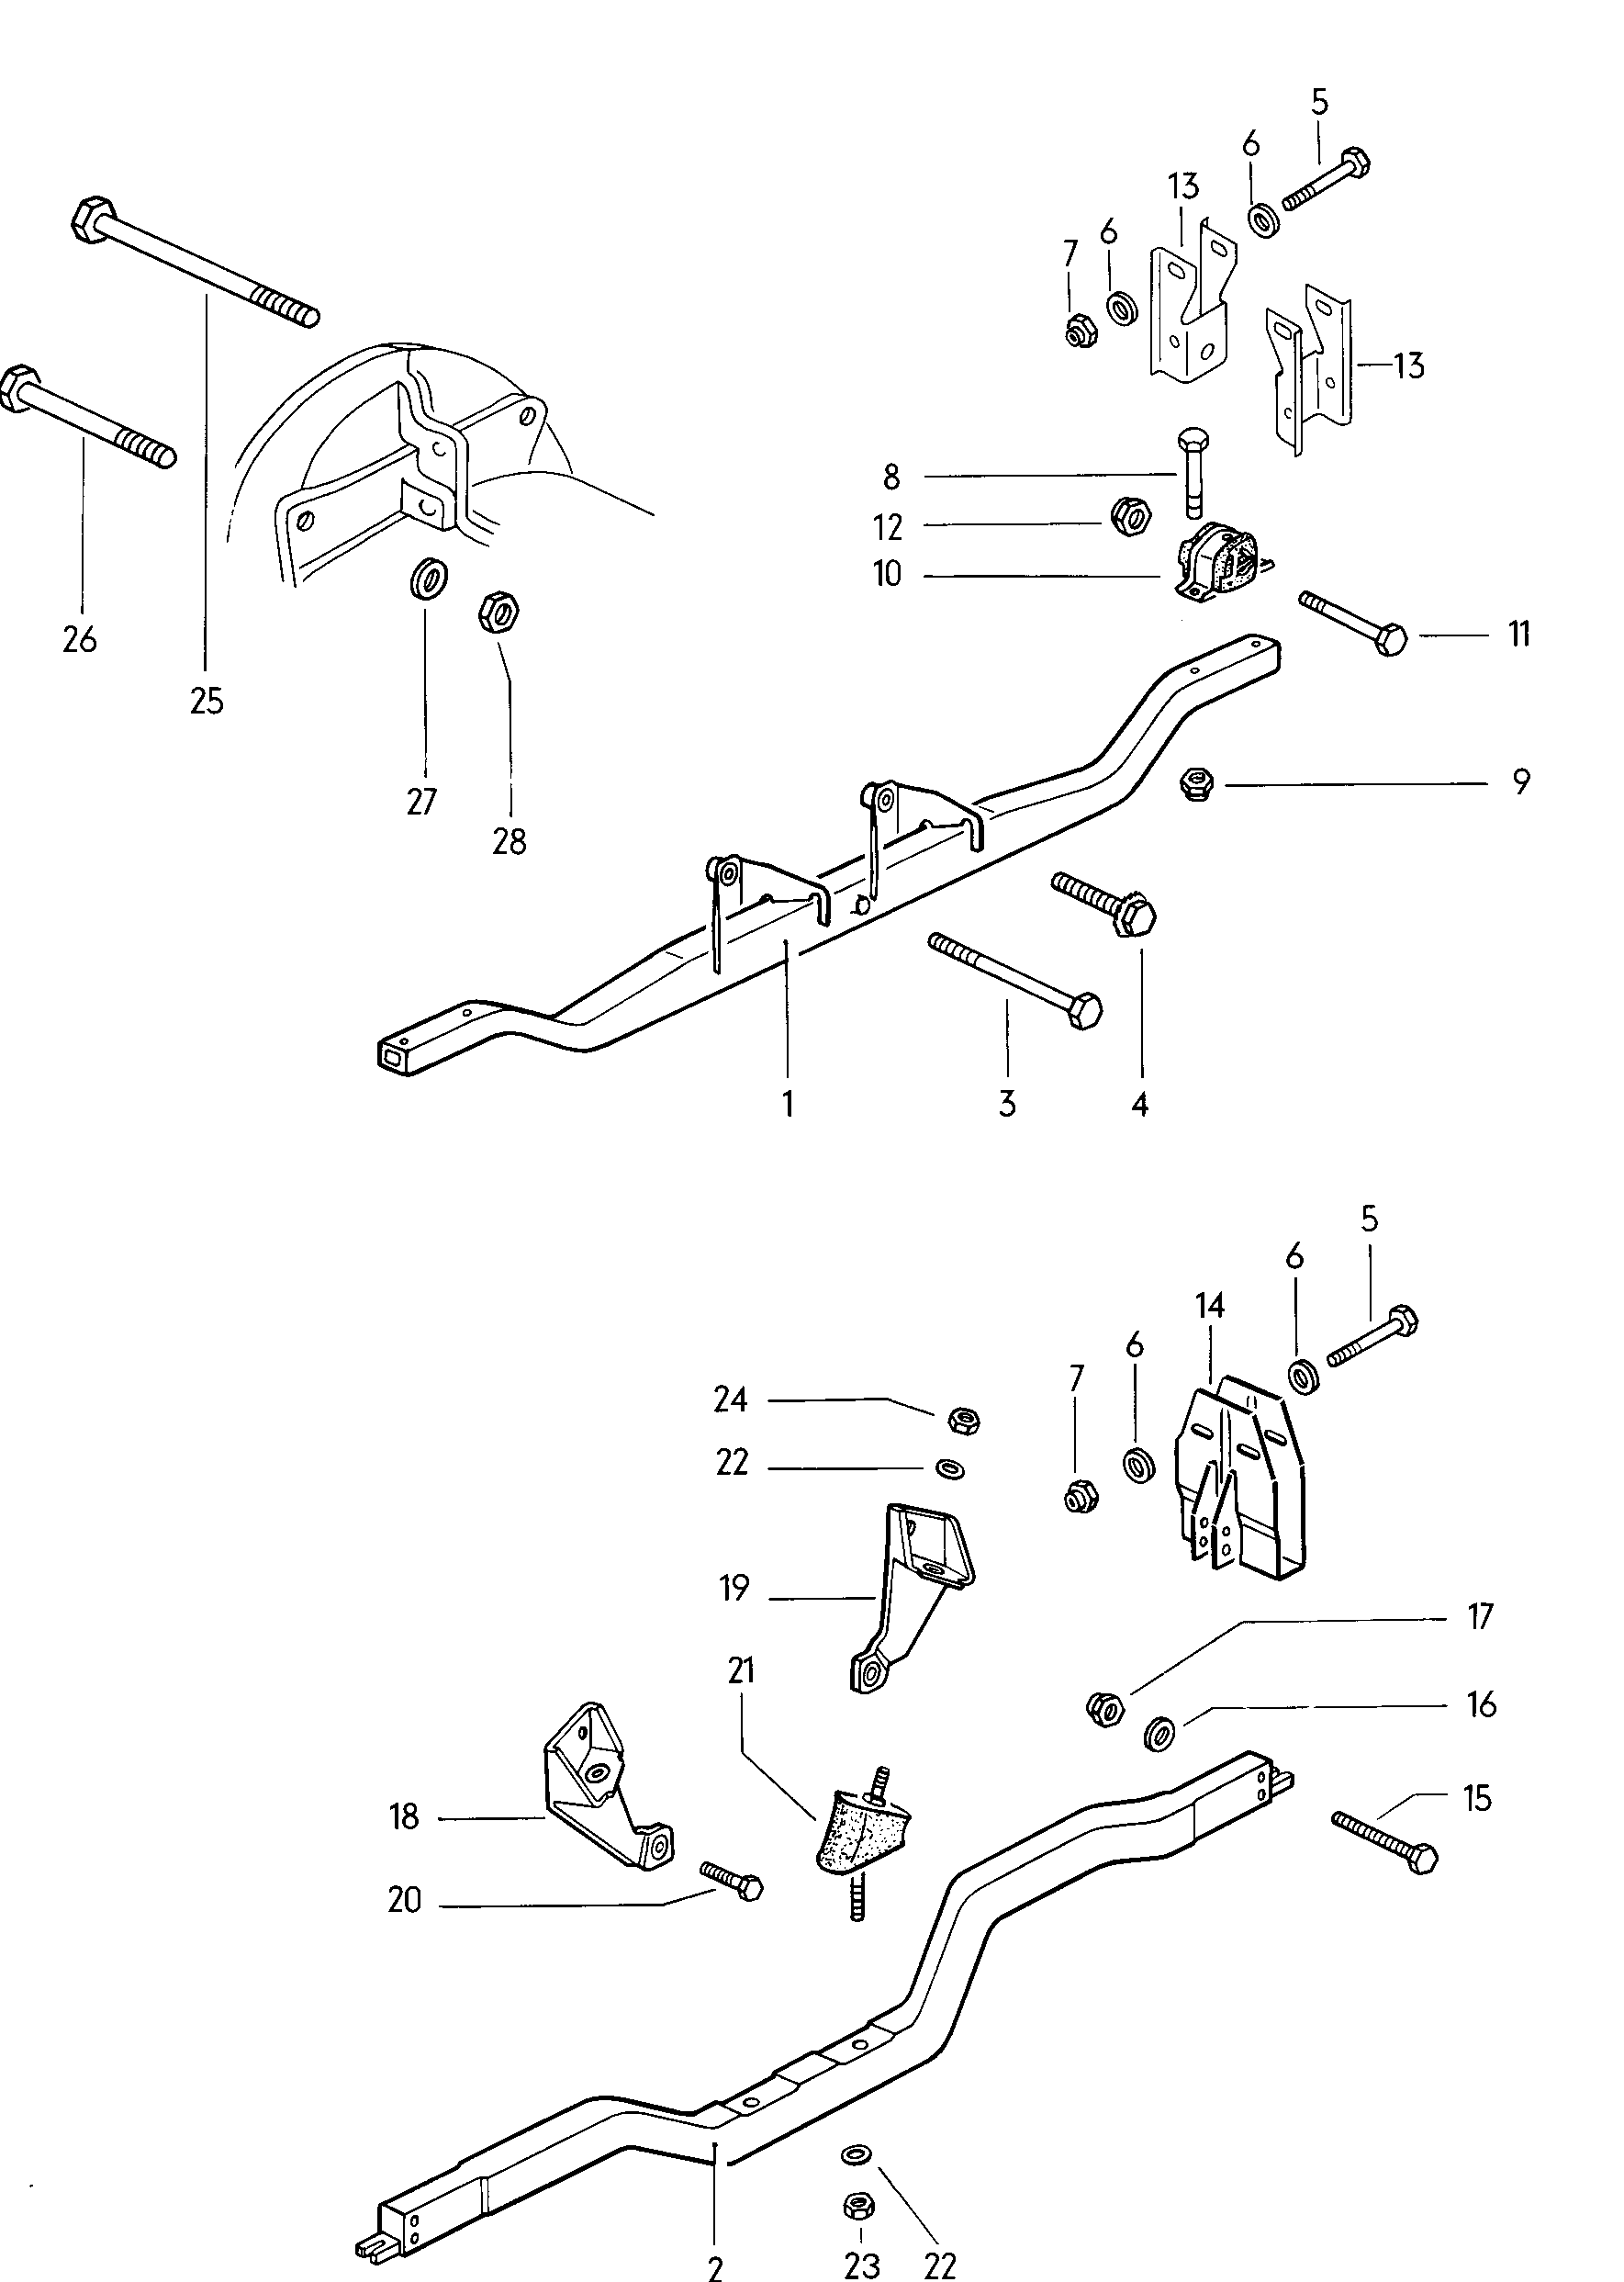 Befestigungsteile fuer Motor - Typ 2/syncro(T2)  